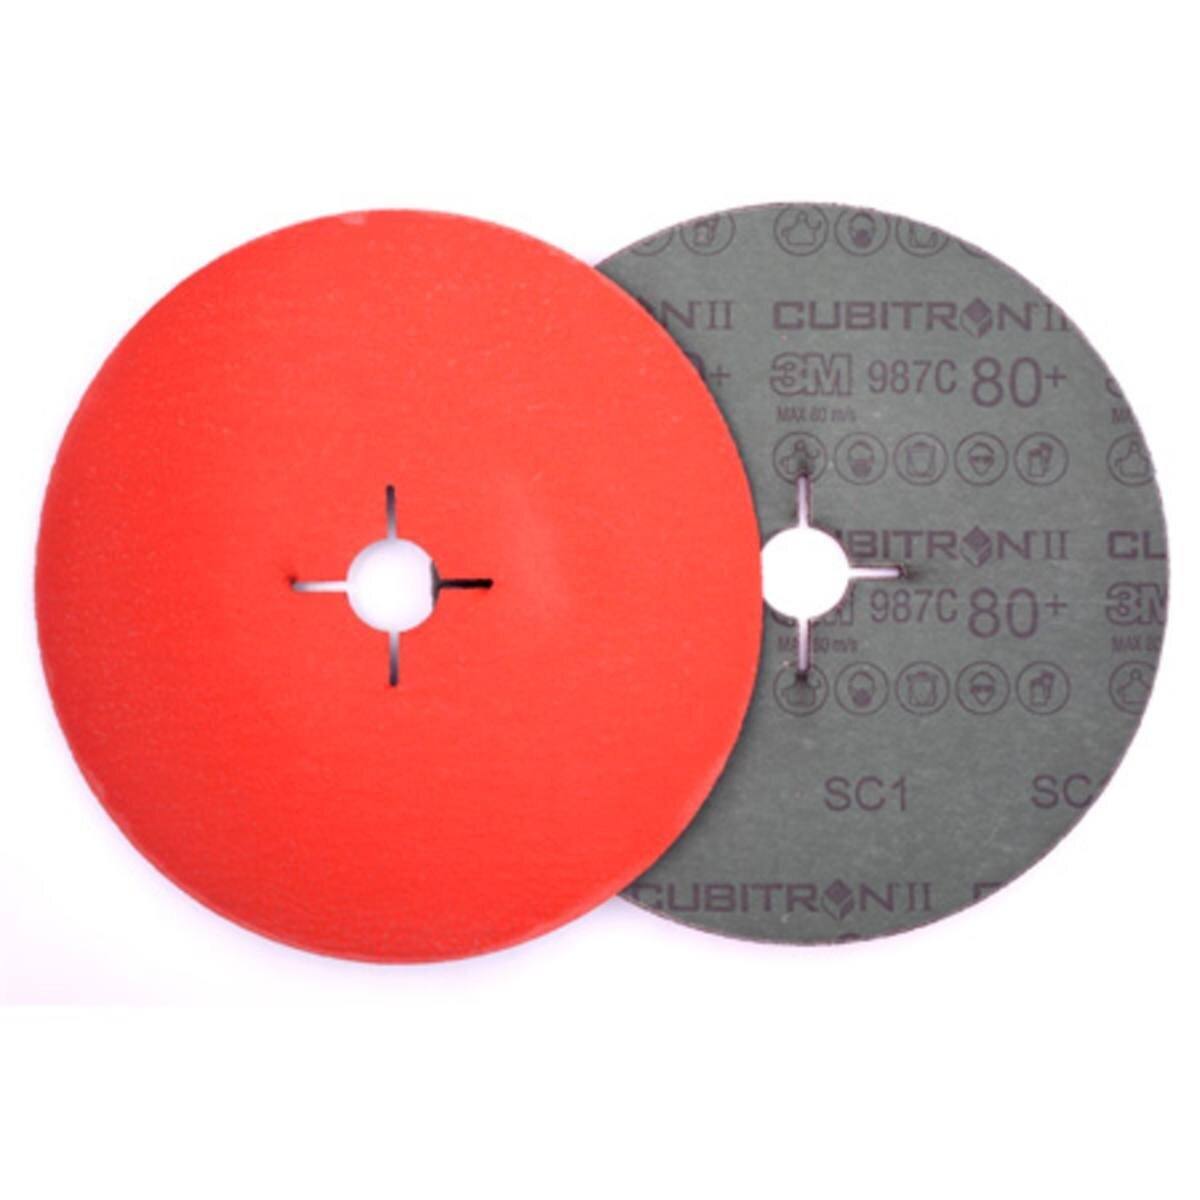 3M Cubitron II disco in fibra 987C, 180 mm, 22,23 mm, 80+ #464047